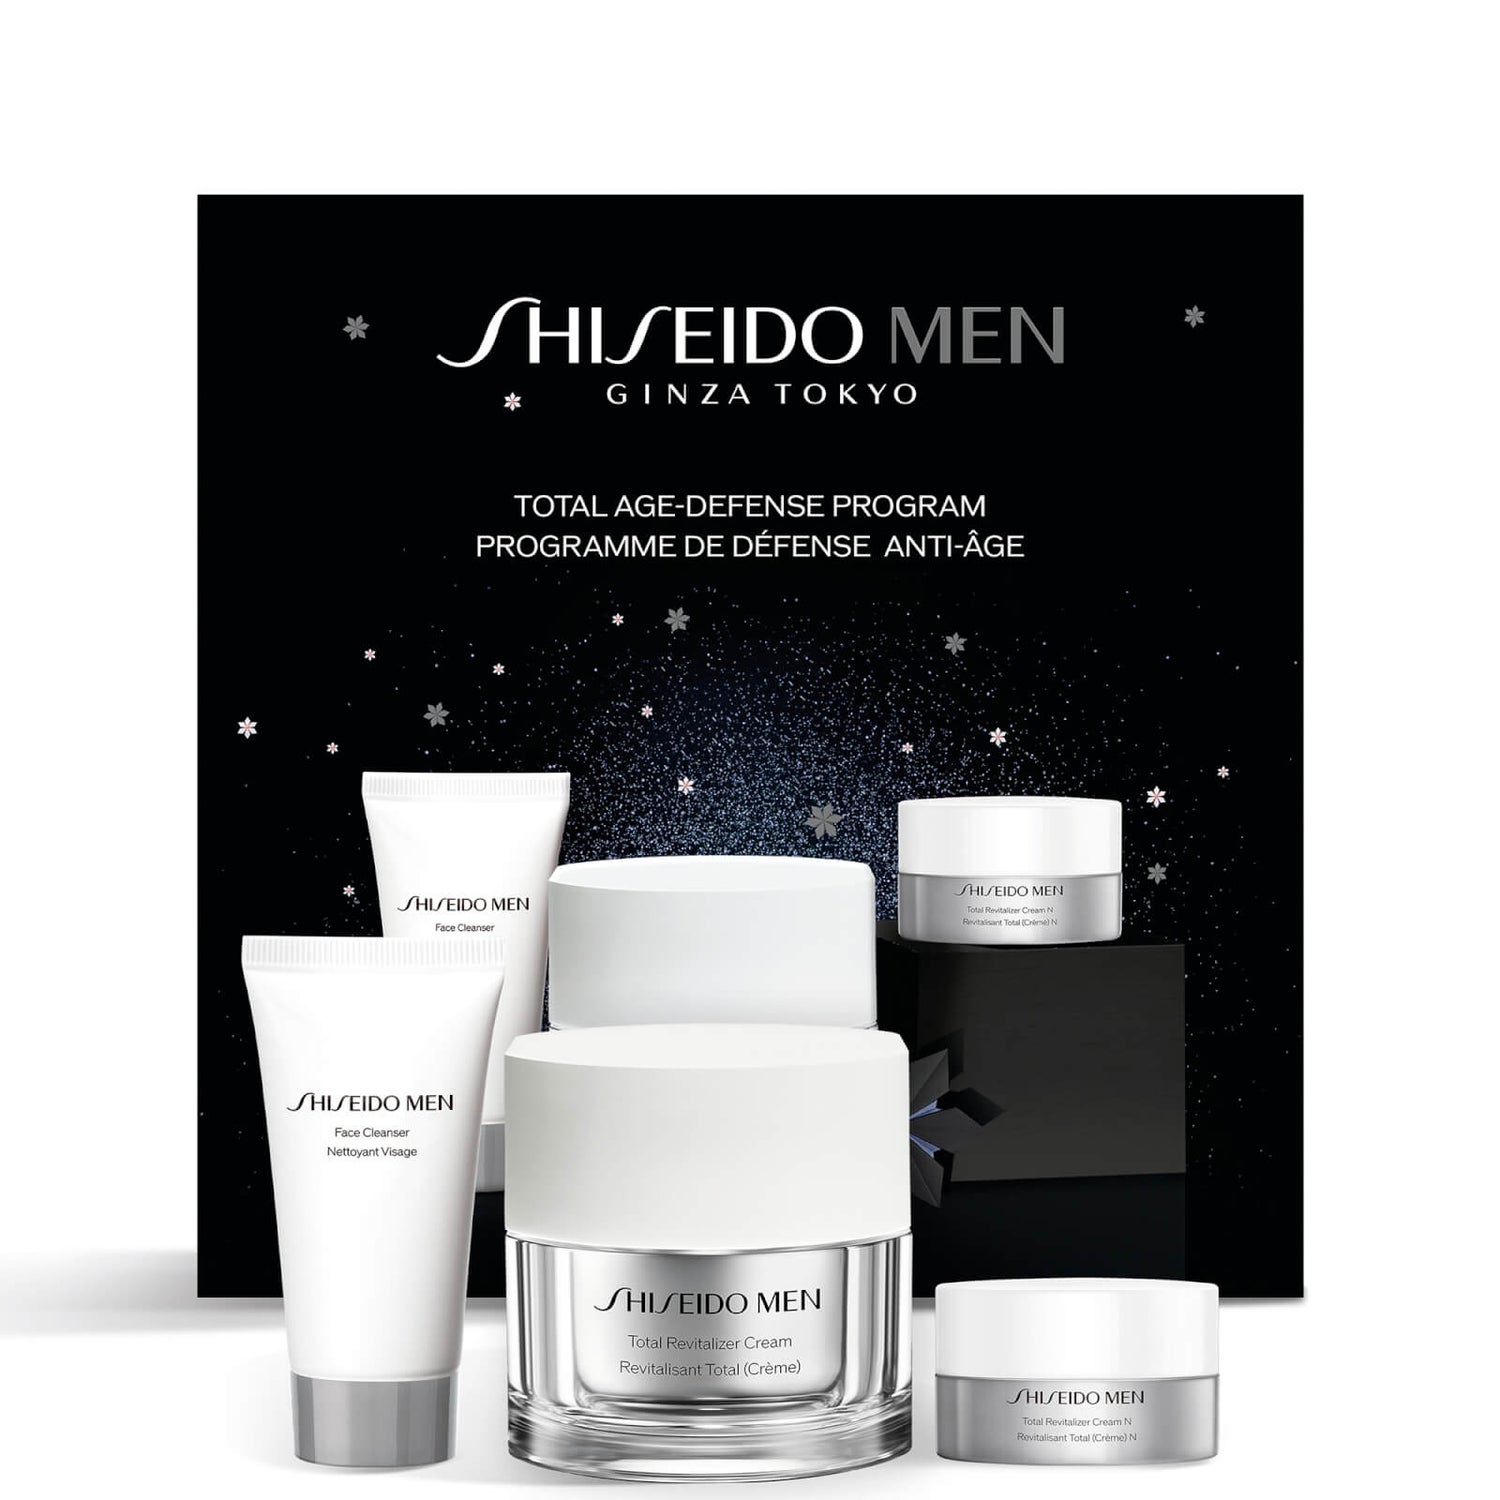 Shiseido Men Holiday Kit